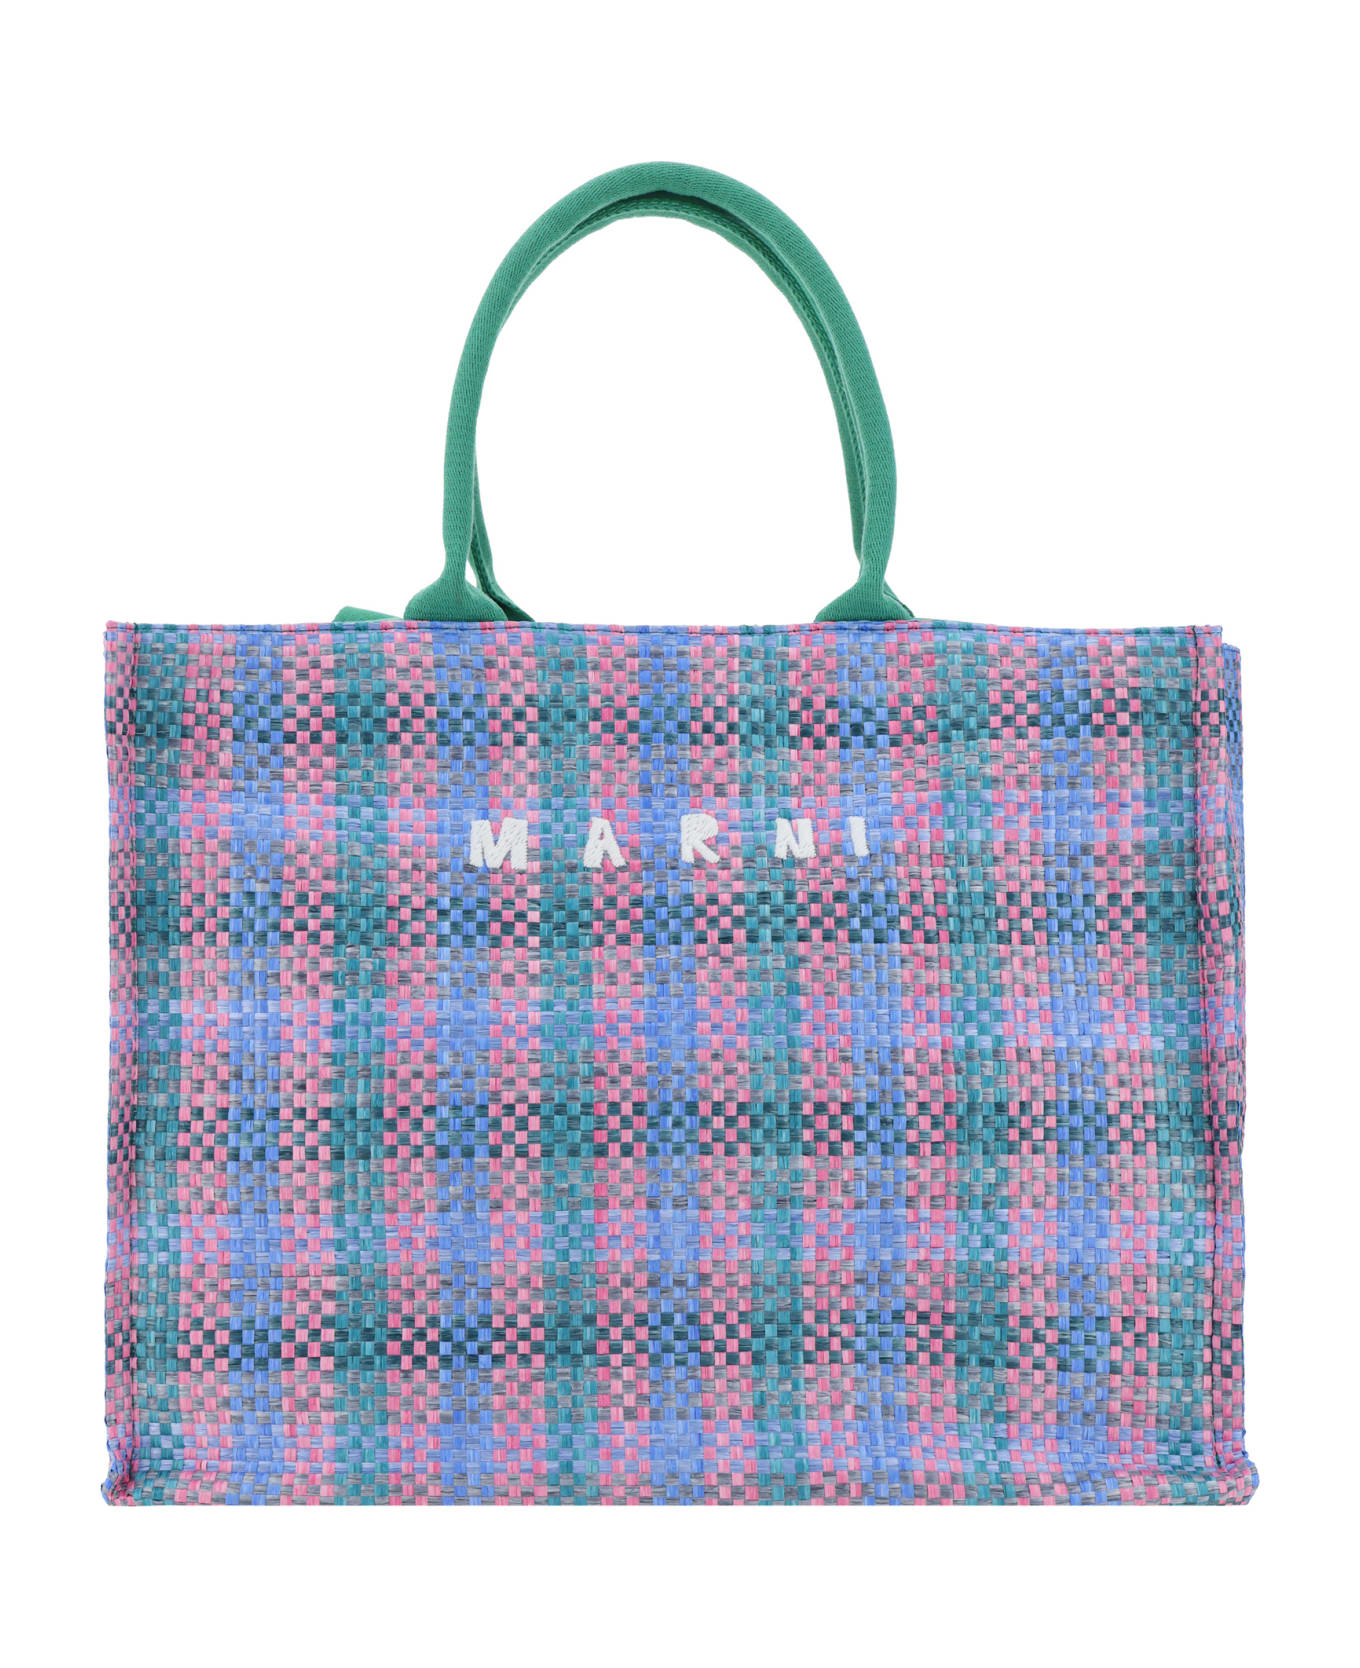 Marni Handbag - Green